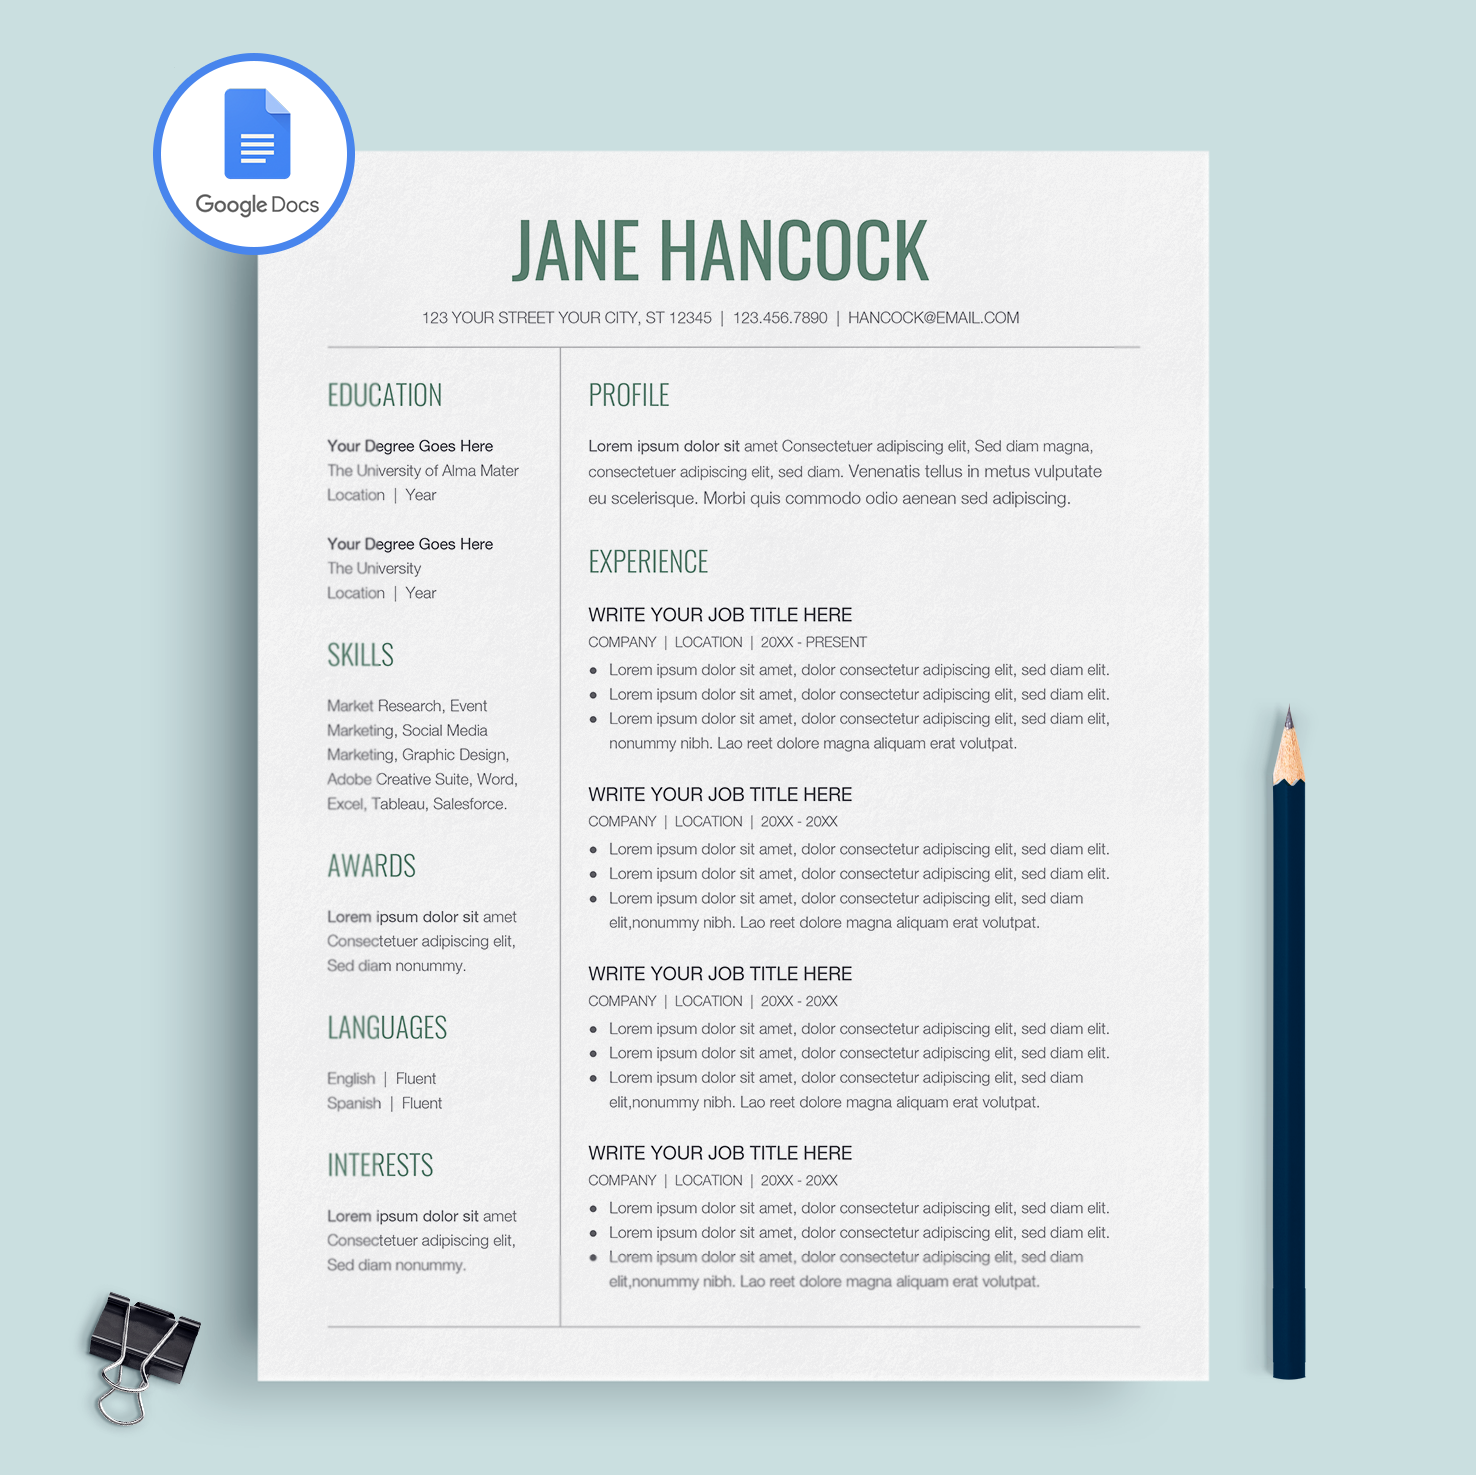 Jane Hancock Google Docs Resume Template